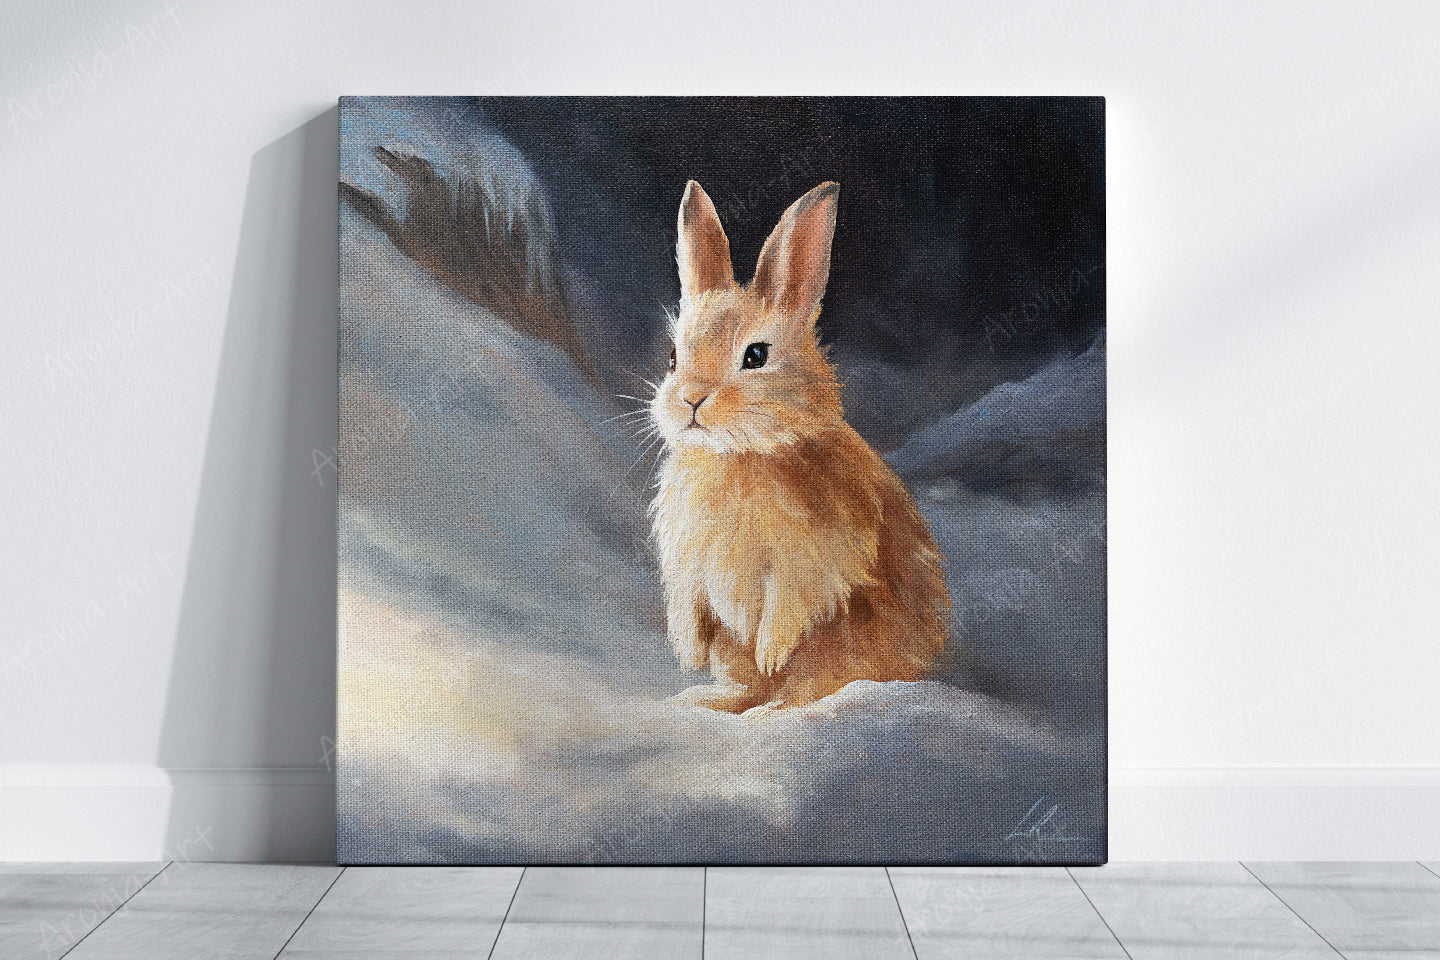 Rabbit in Snow (Print)